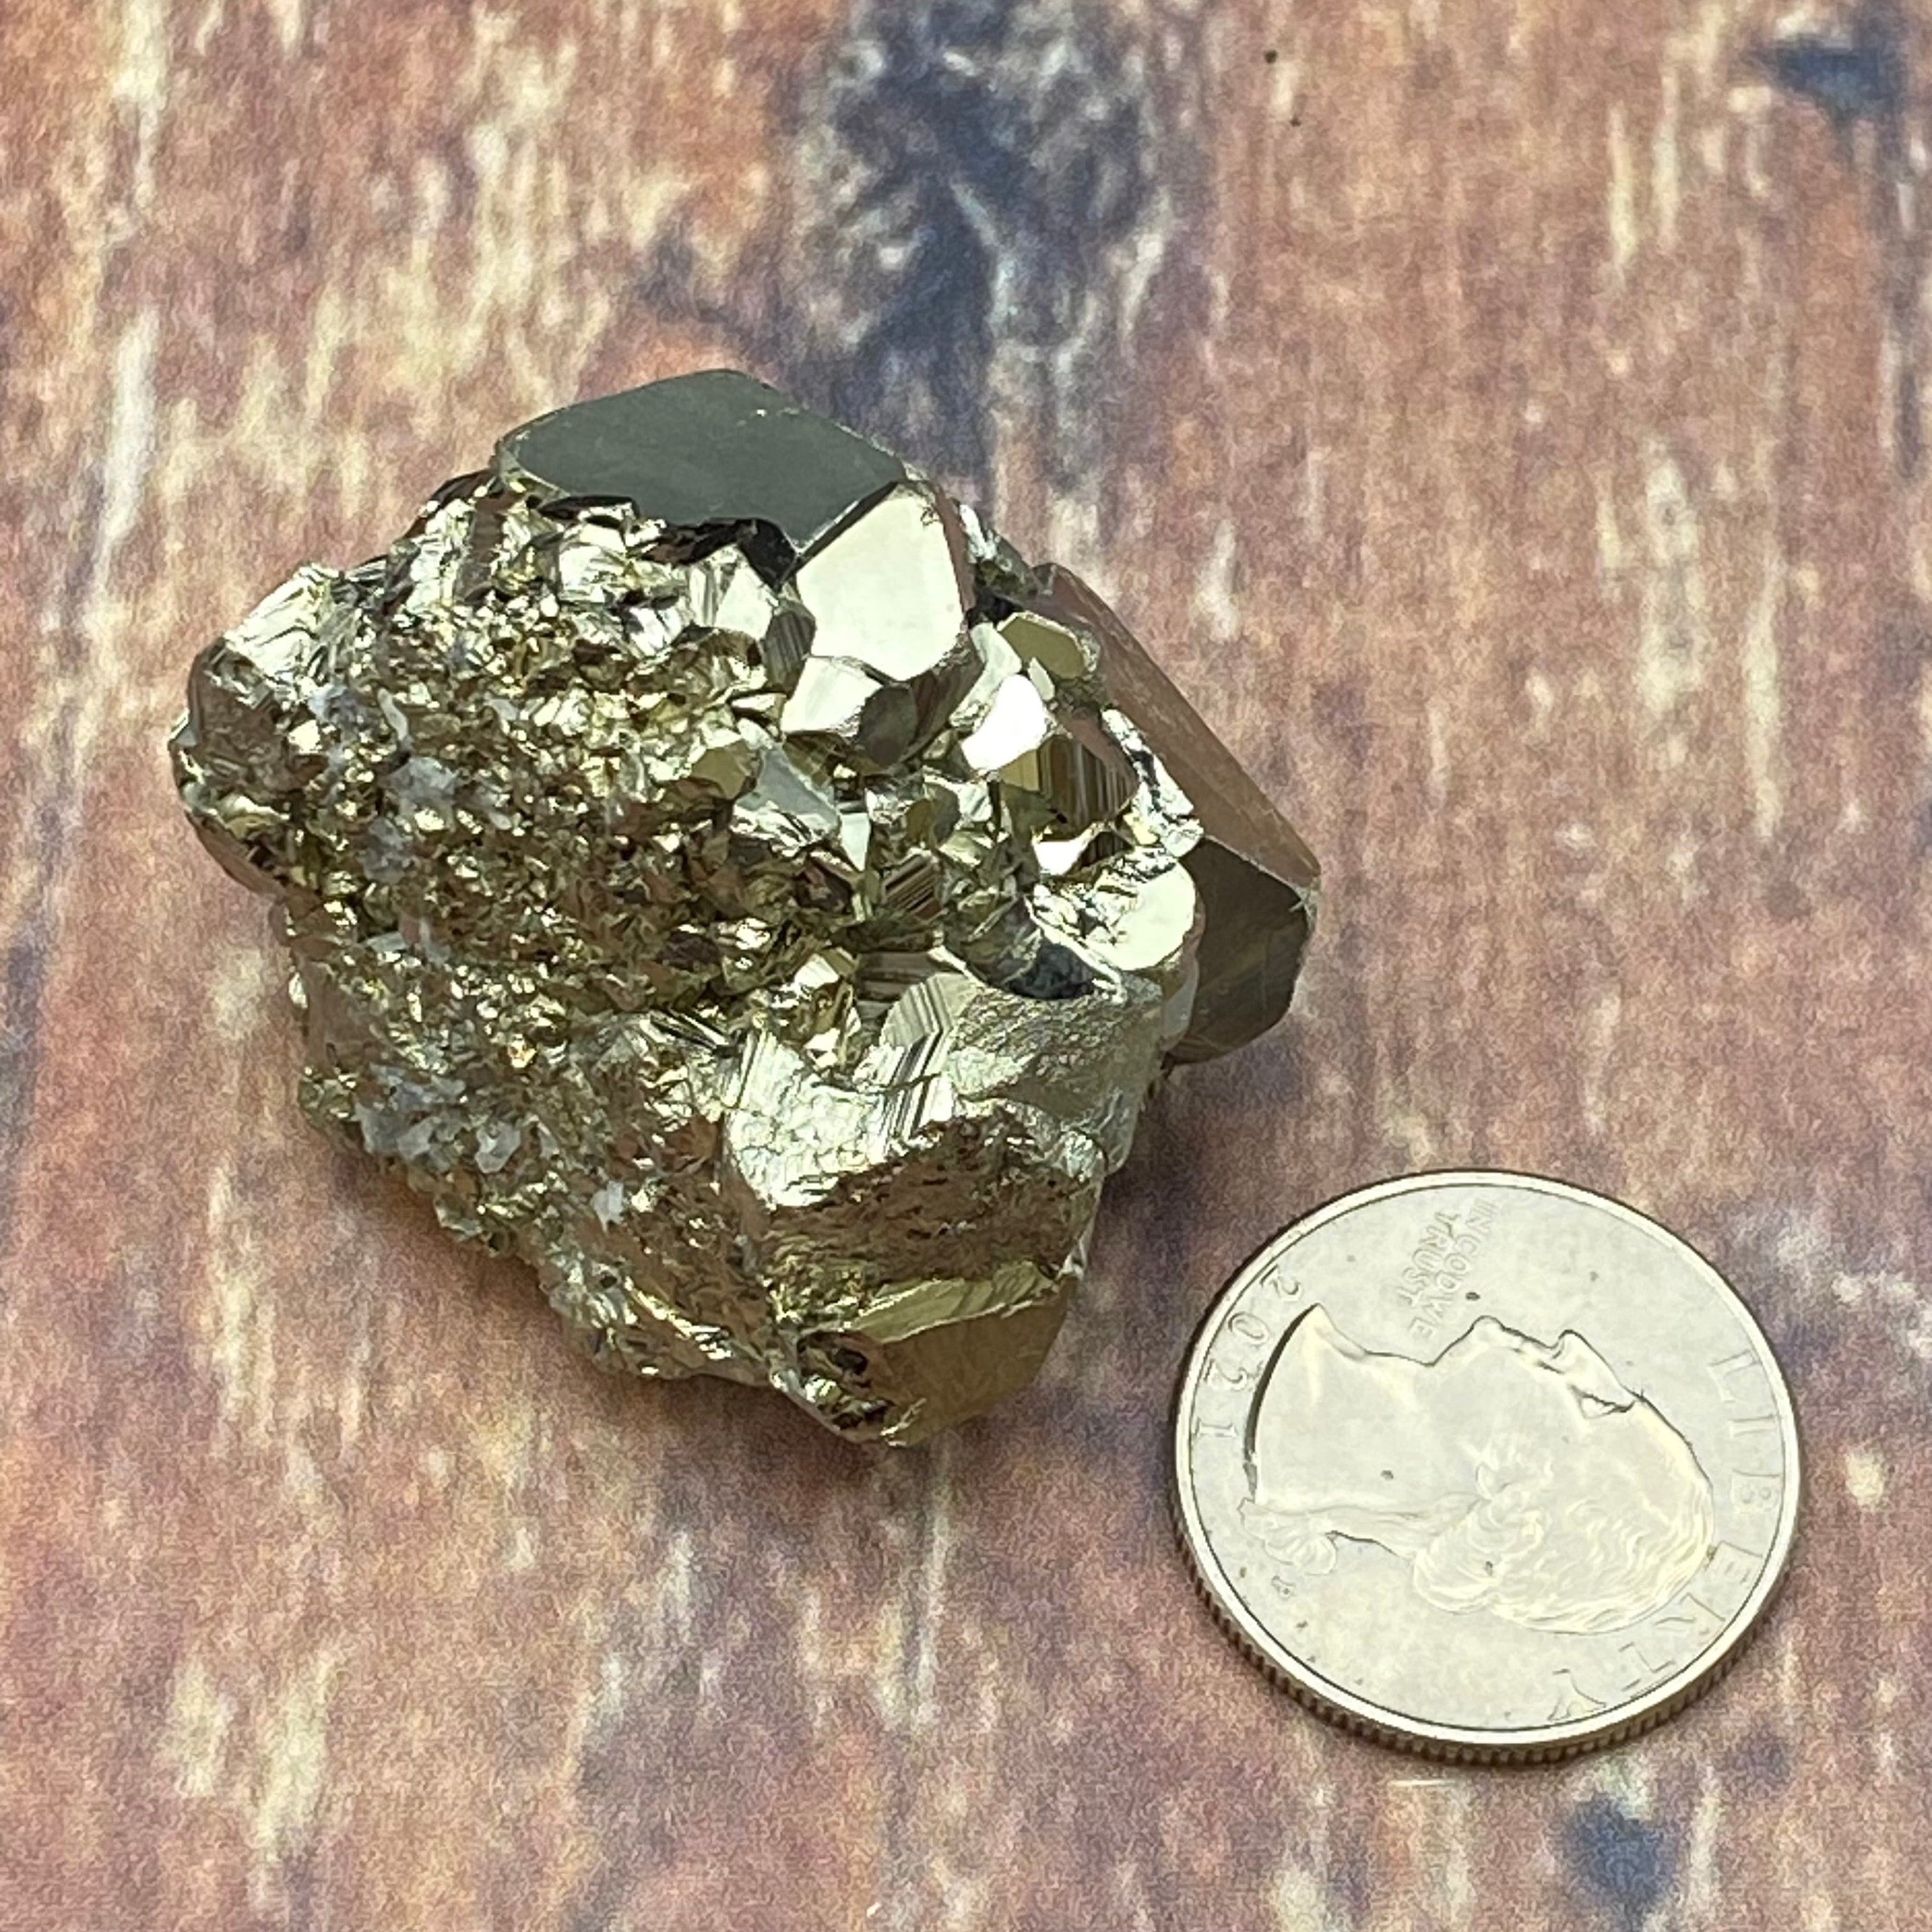 Peruvian Pyrite Crystal - 016